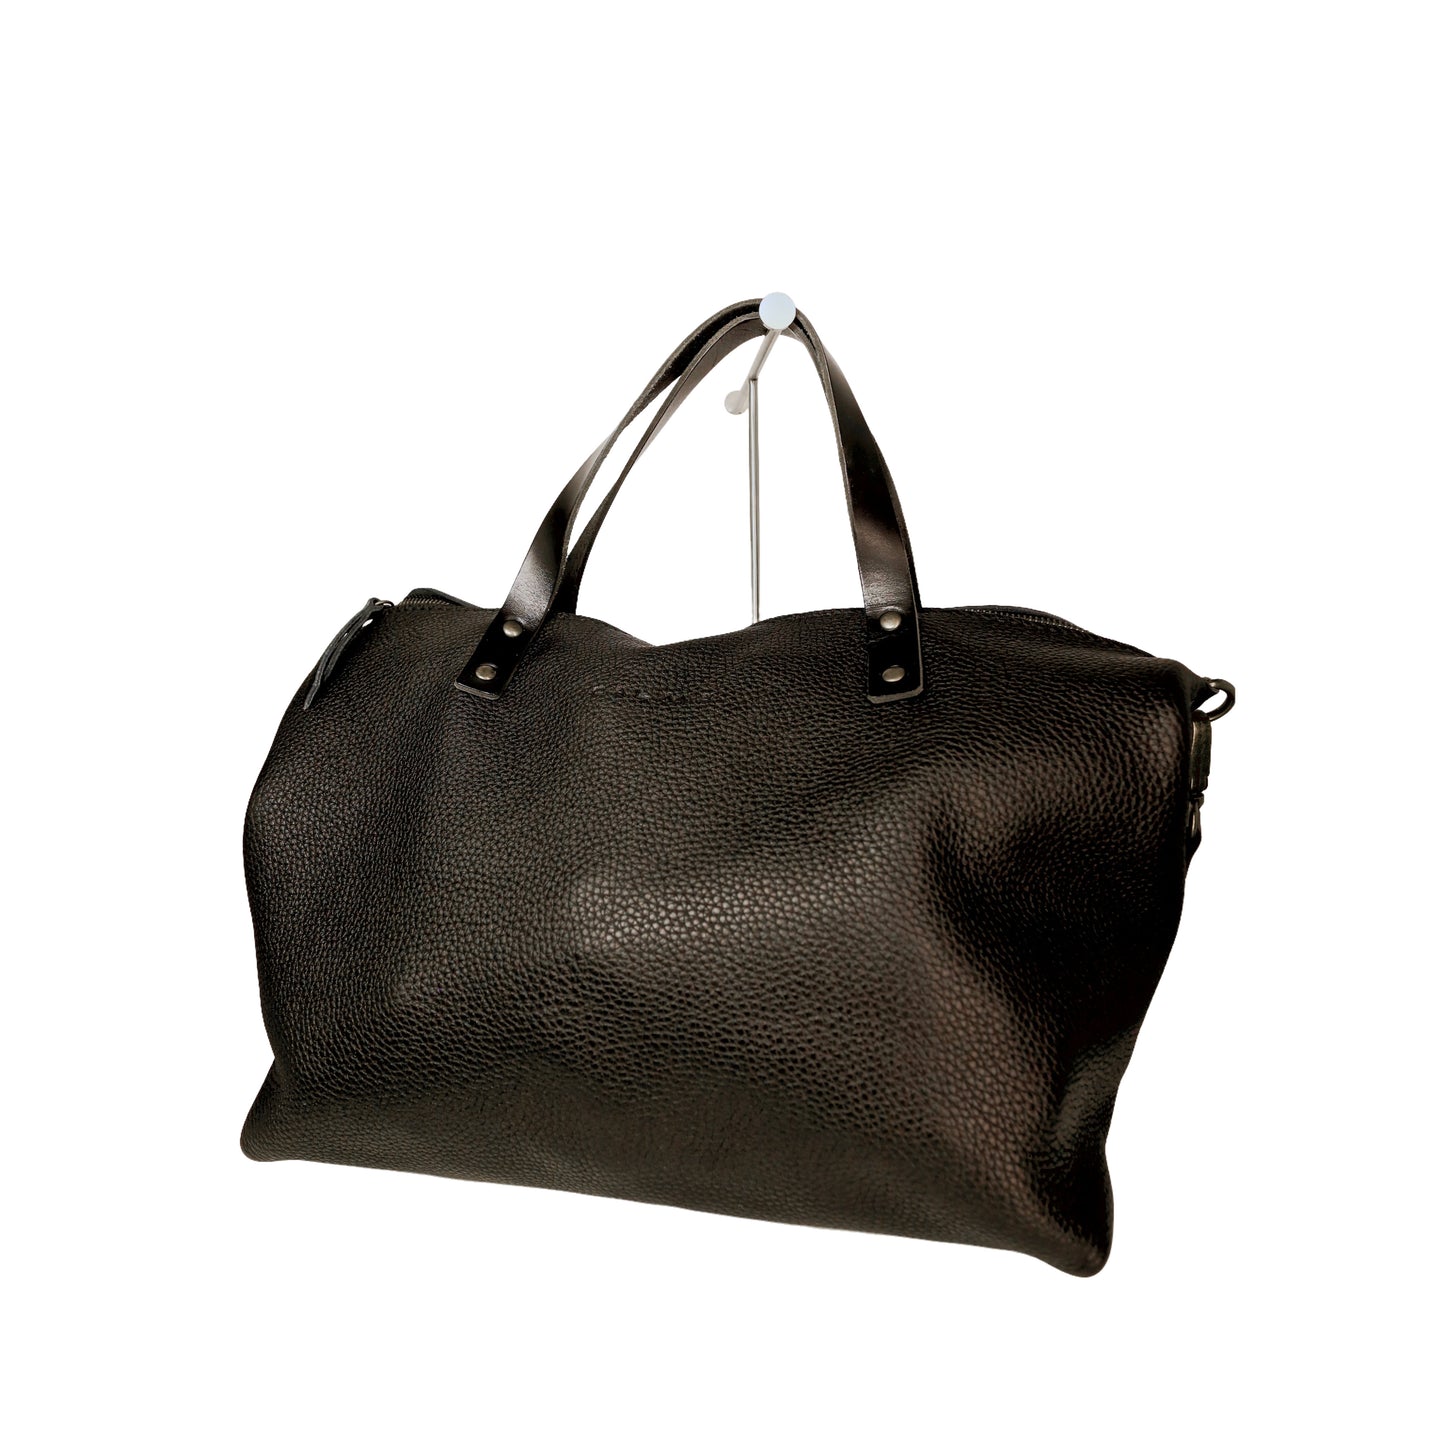 Calma Leather Handbag